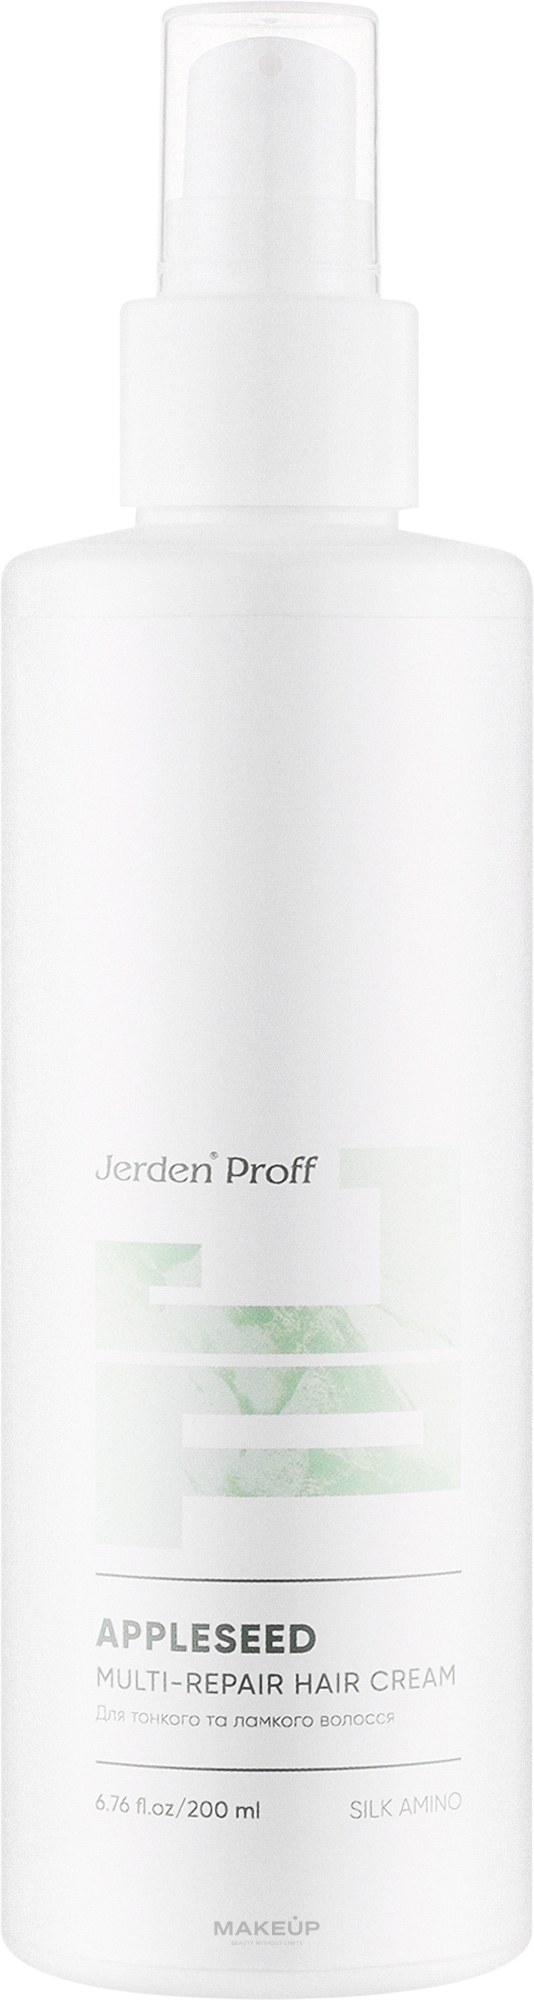 Мультифункциональный крем для волос - Jerden Proff Appleseed Multi-Repair Hair Cream — фото 200ml